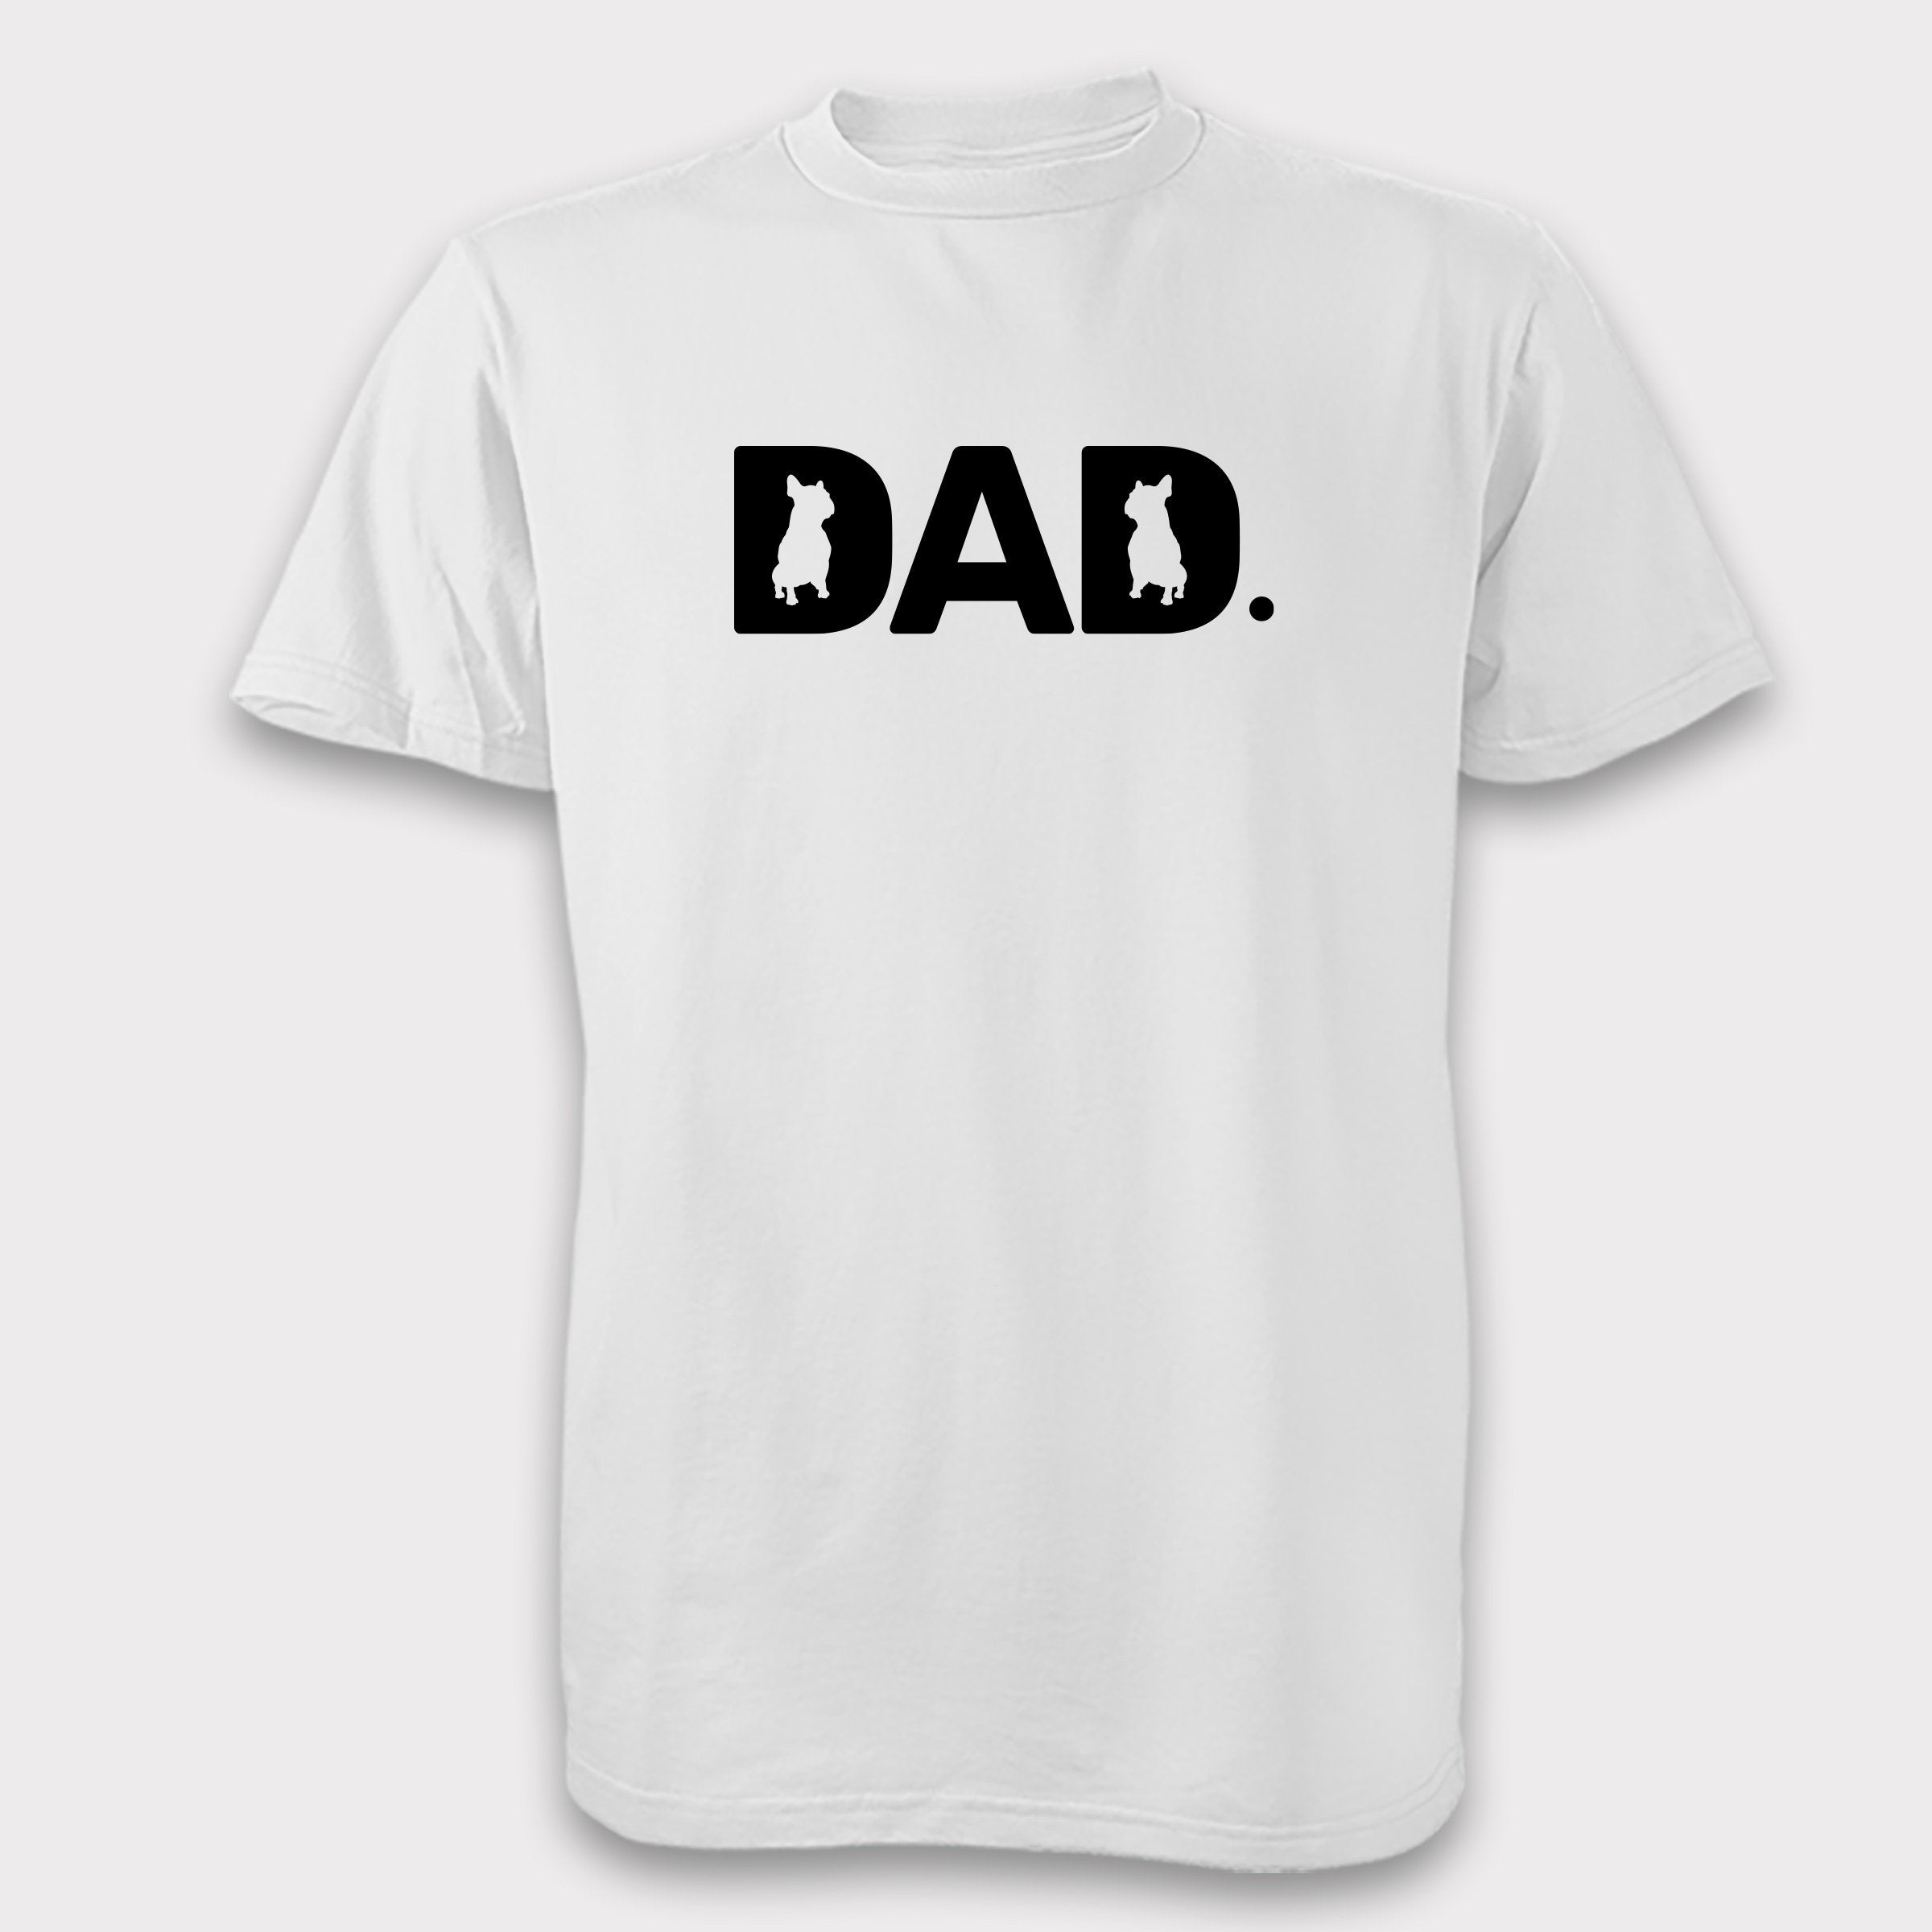 Dad Period. T-Shirt